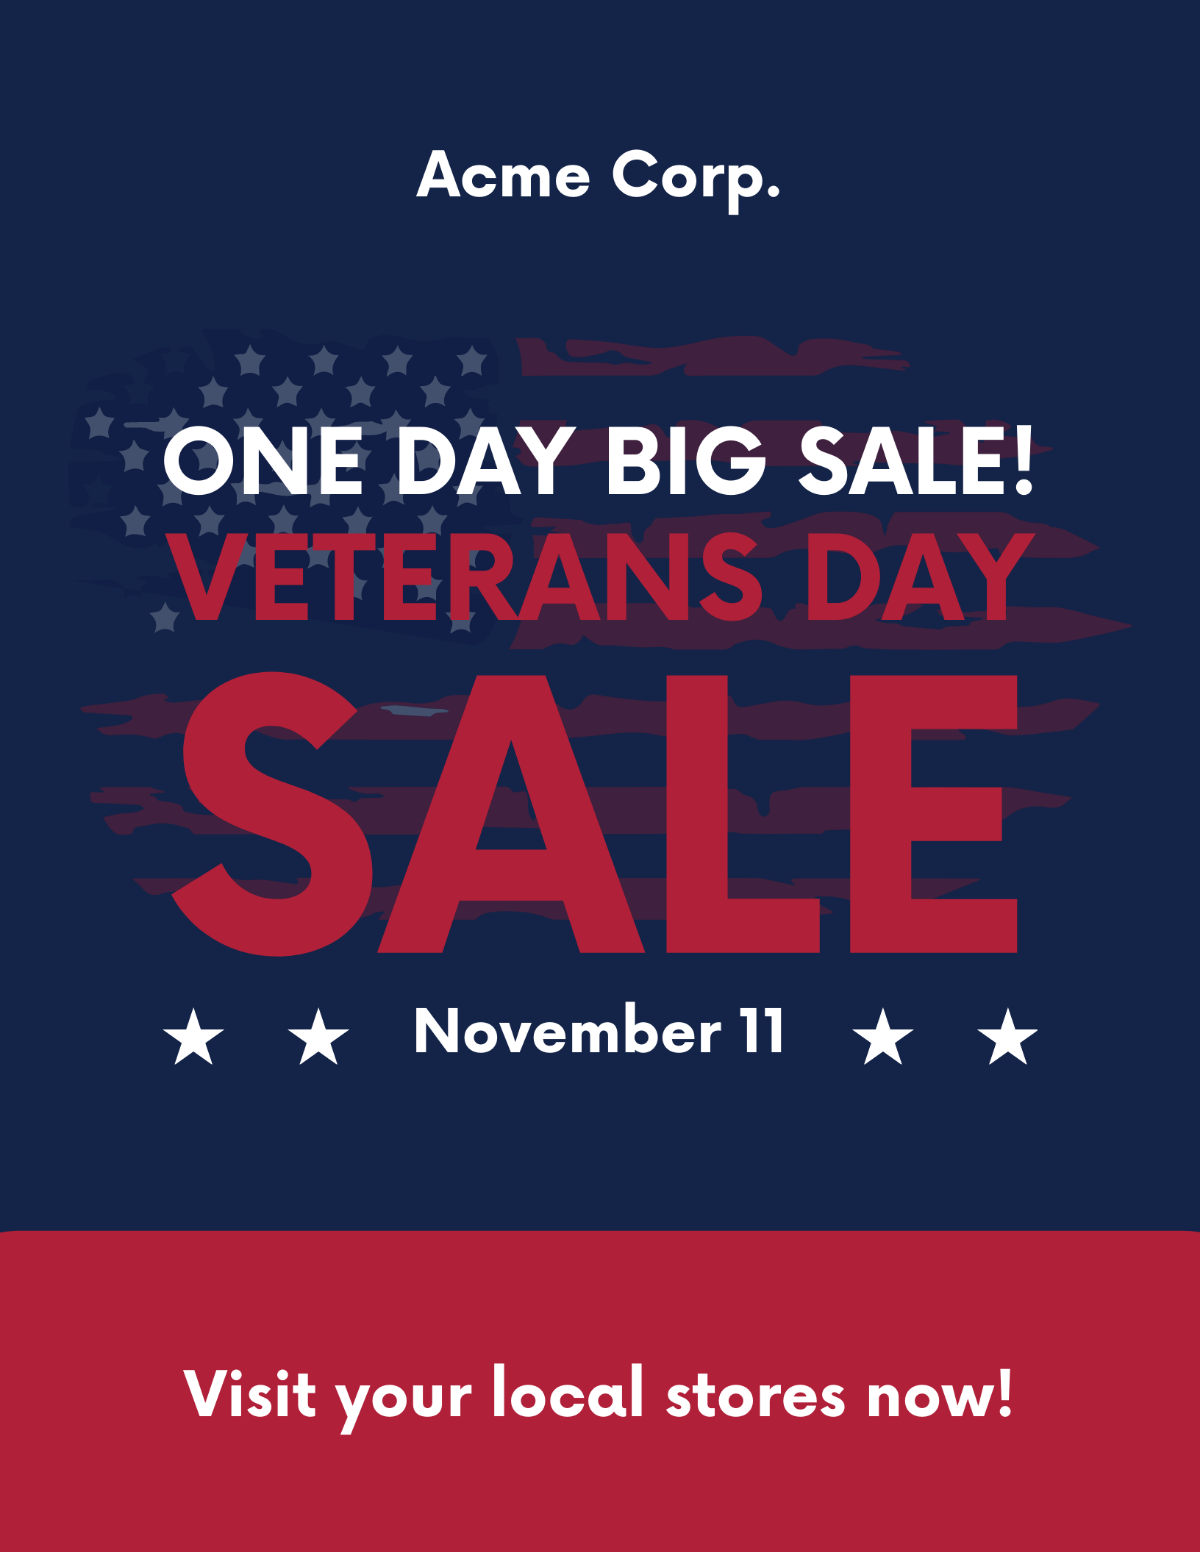 Veterans Day Advertising Flyer Template